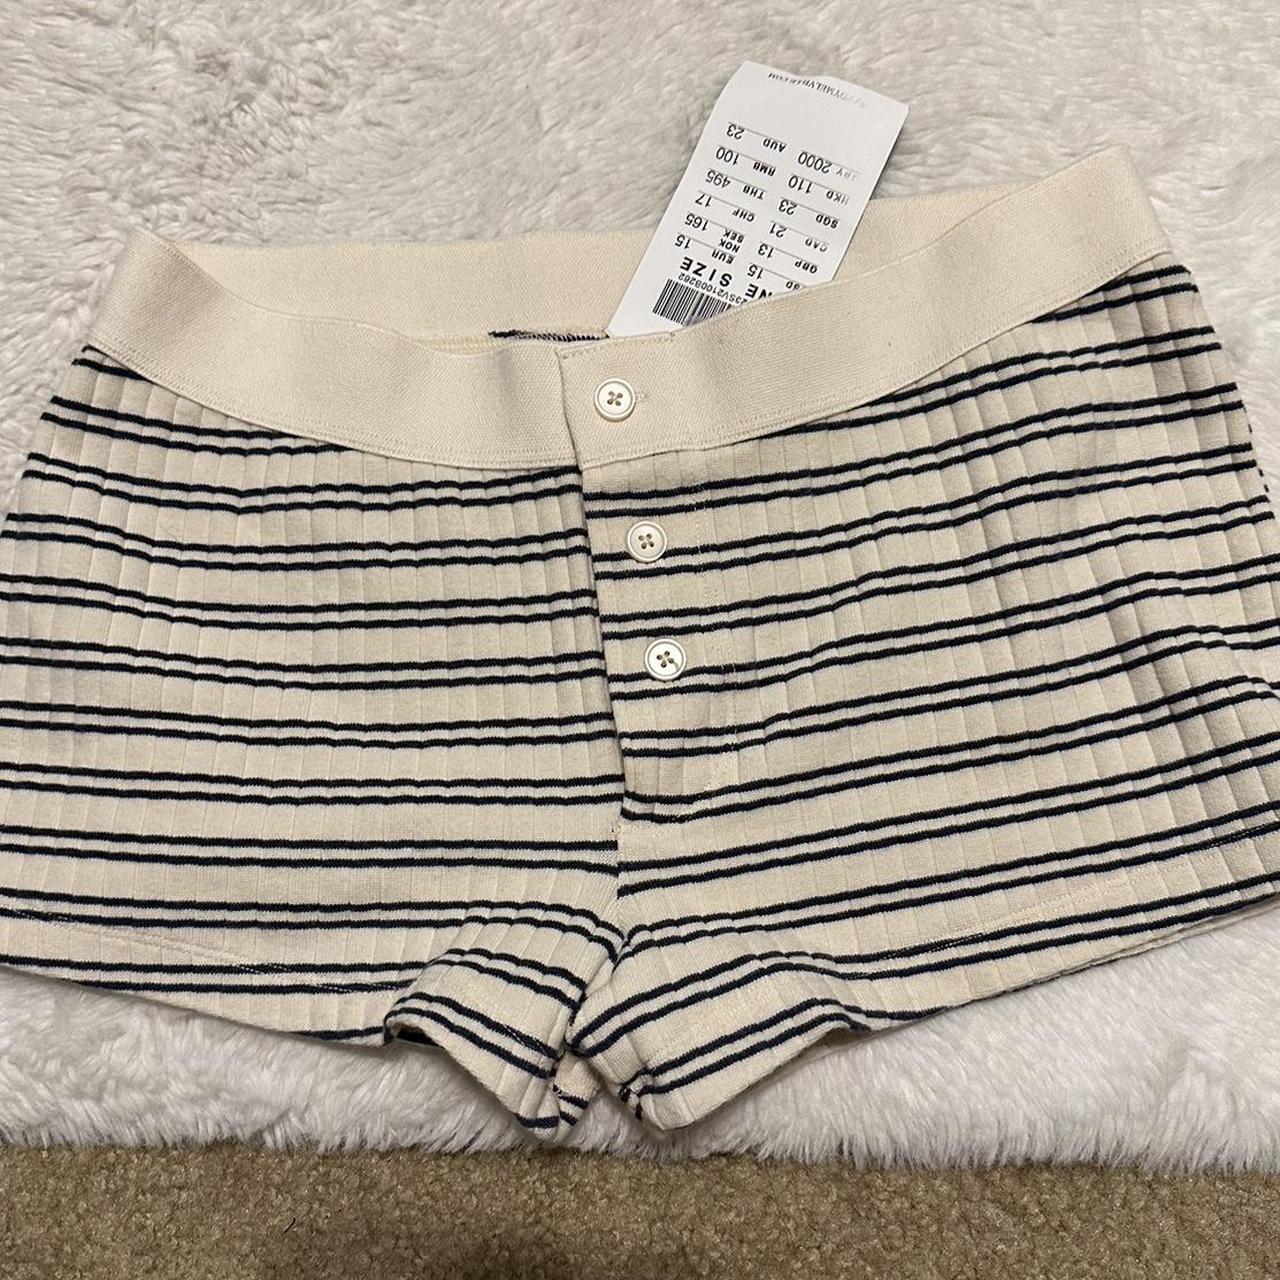 Brandy Melville striped eyelet boy shorts underwear - Depop